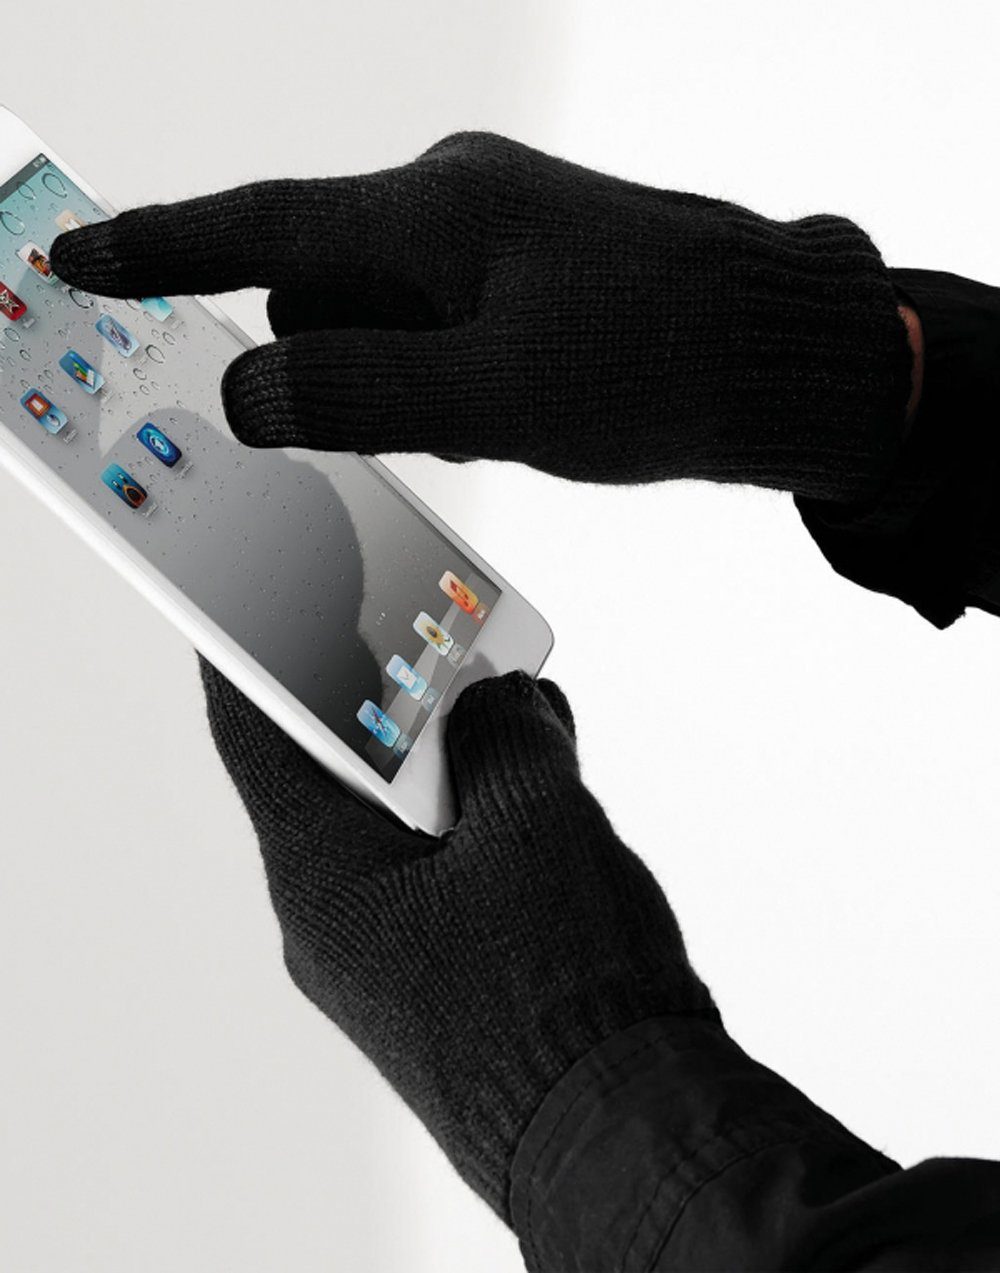 Goodman Gloves Finger Touchscree-geeignet, und leitfähig Design Touchscreen Heather teilweise Navy Strickhandschuhe Fingerhandschuh Daumen